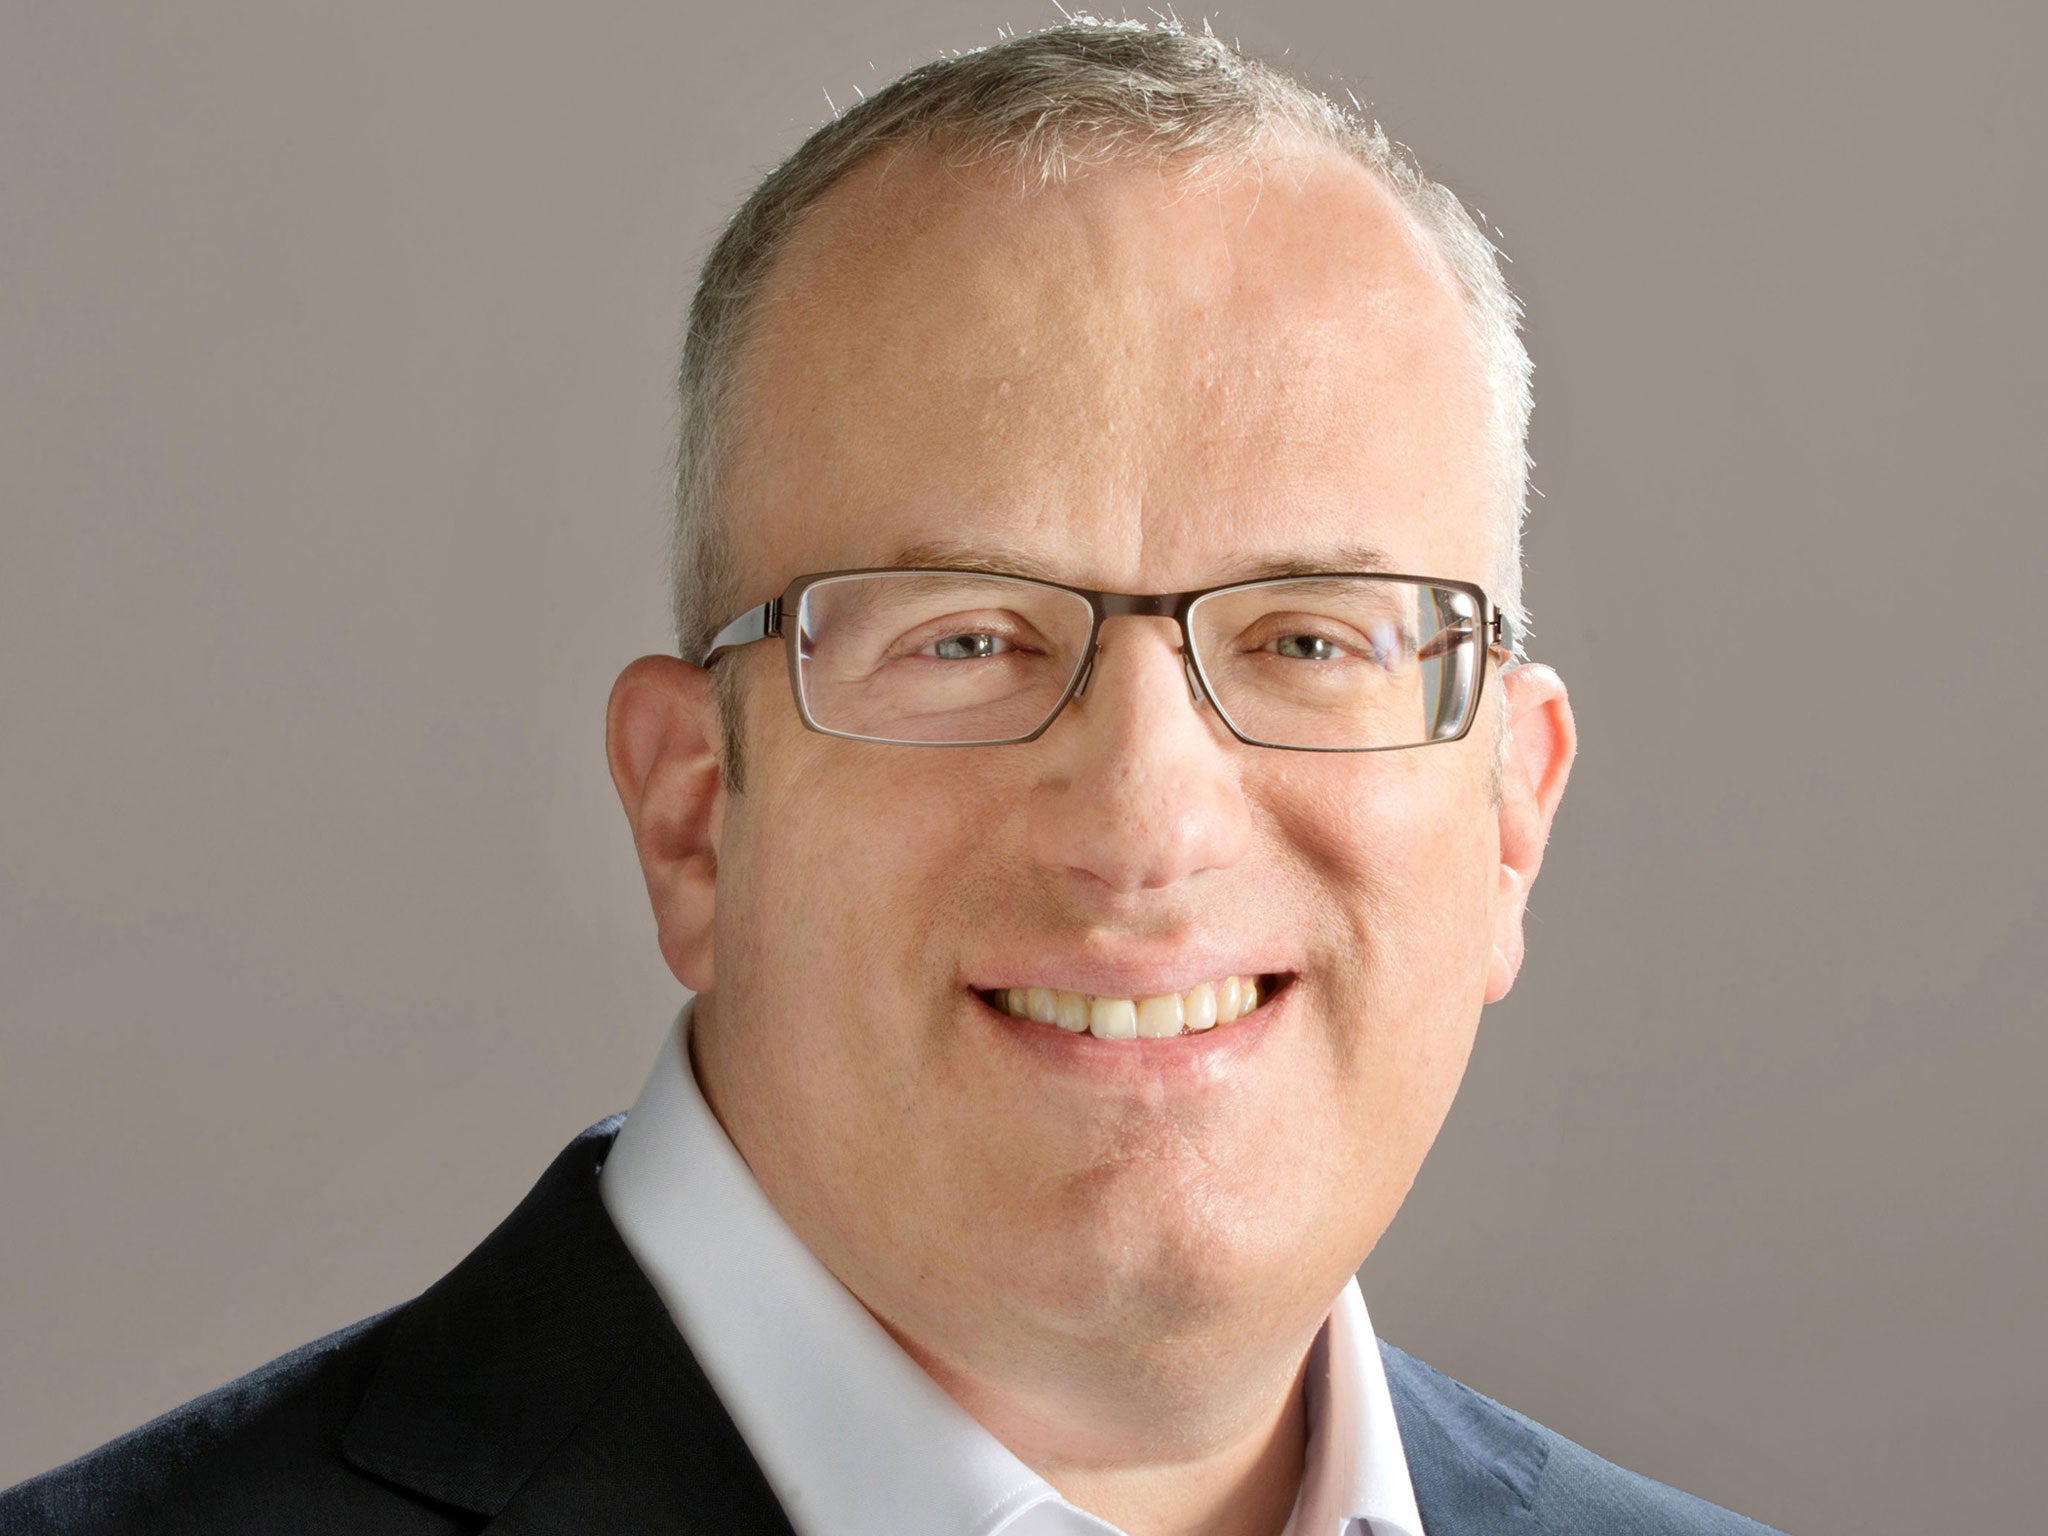 Mozilla CEO Brendan Eich